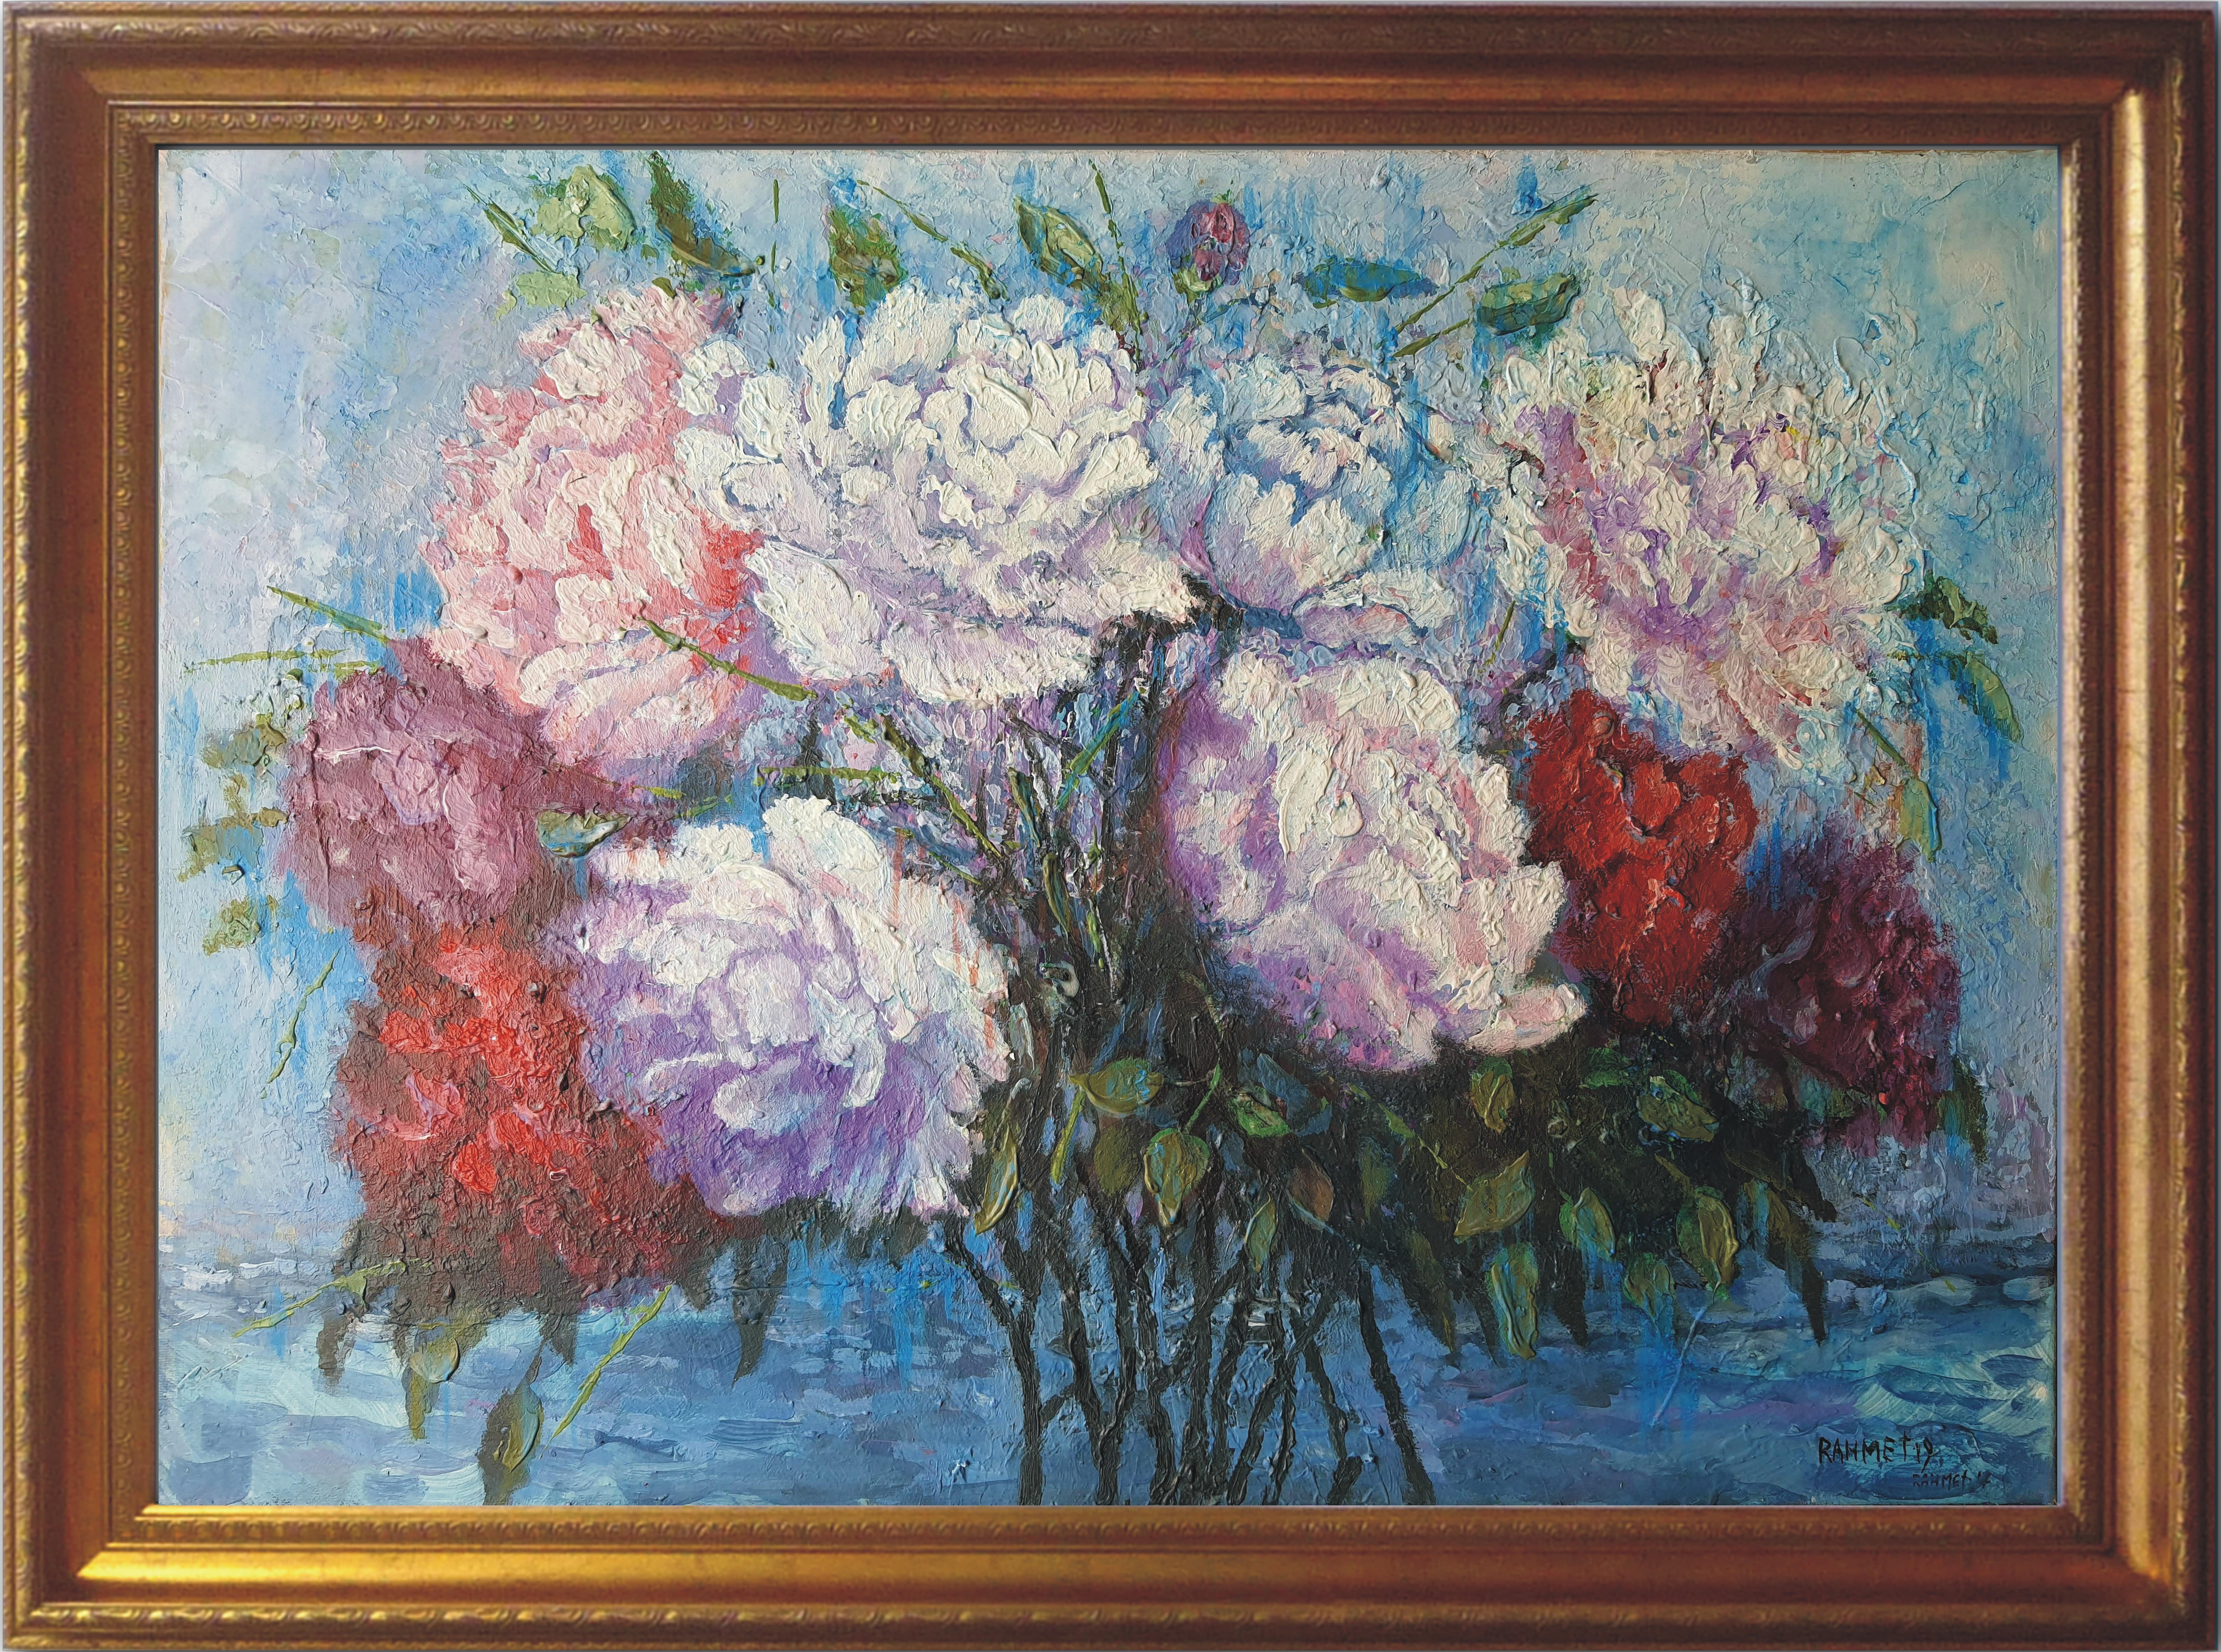 Flowers on the background of the Sea  - Painting by RAKHMET REDZHEPOV (RAMZI)